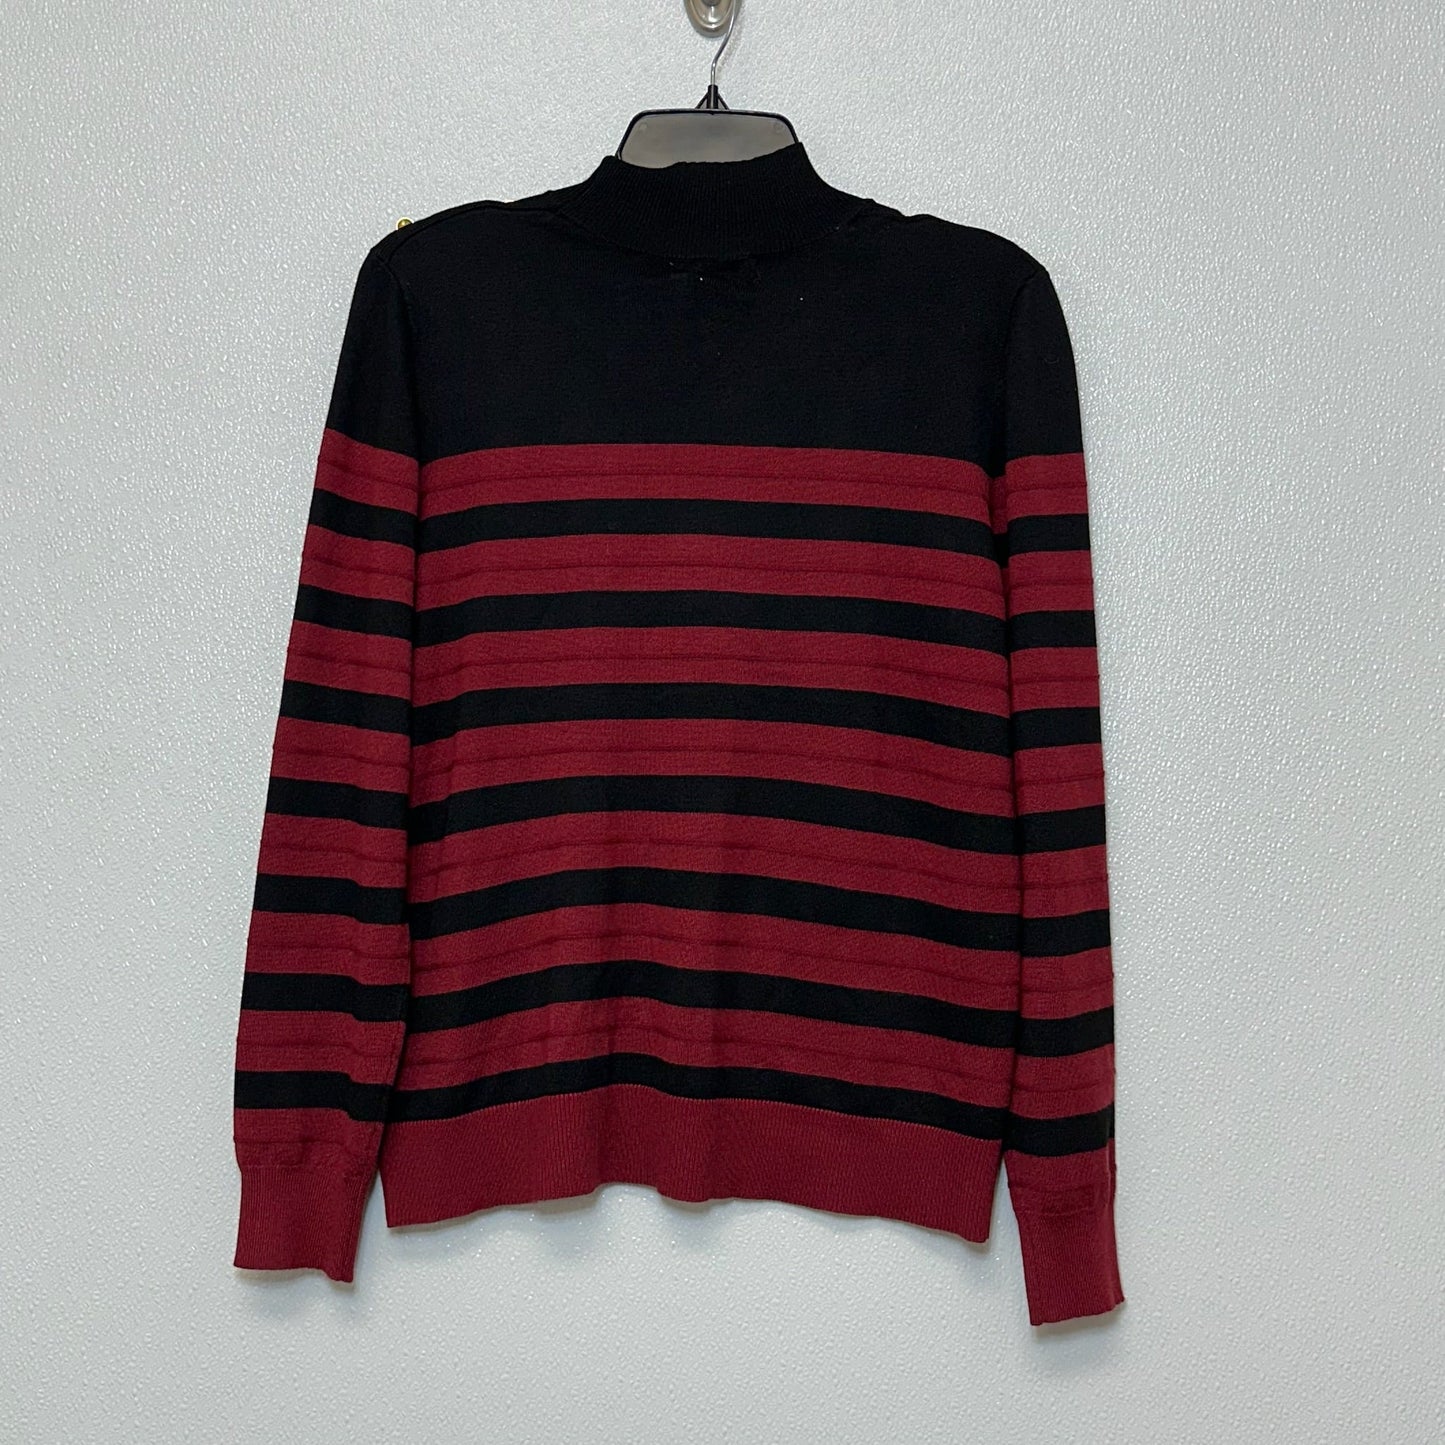 Sweater By Retrology  Size: L